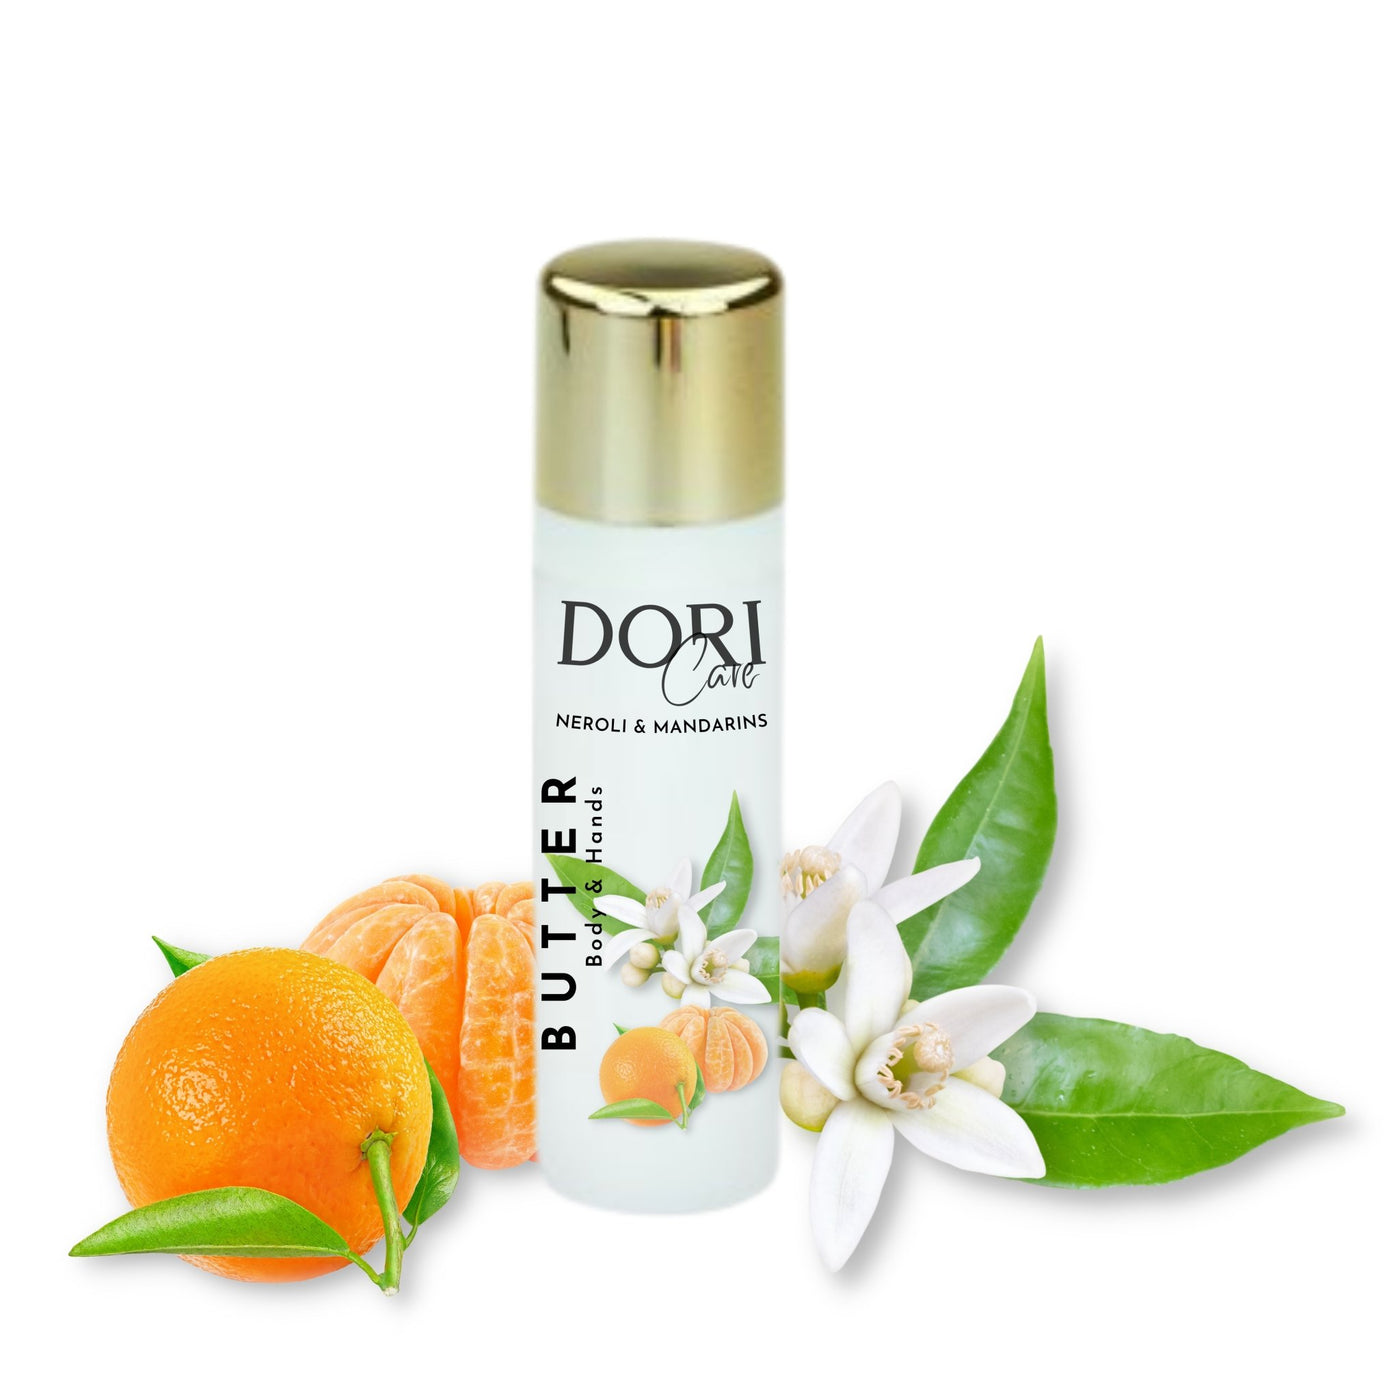 DORICare - BUTTER Body & Hands - Neroli & Mandarin - Doriana Cosmetics GmbH